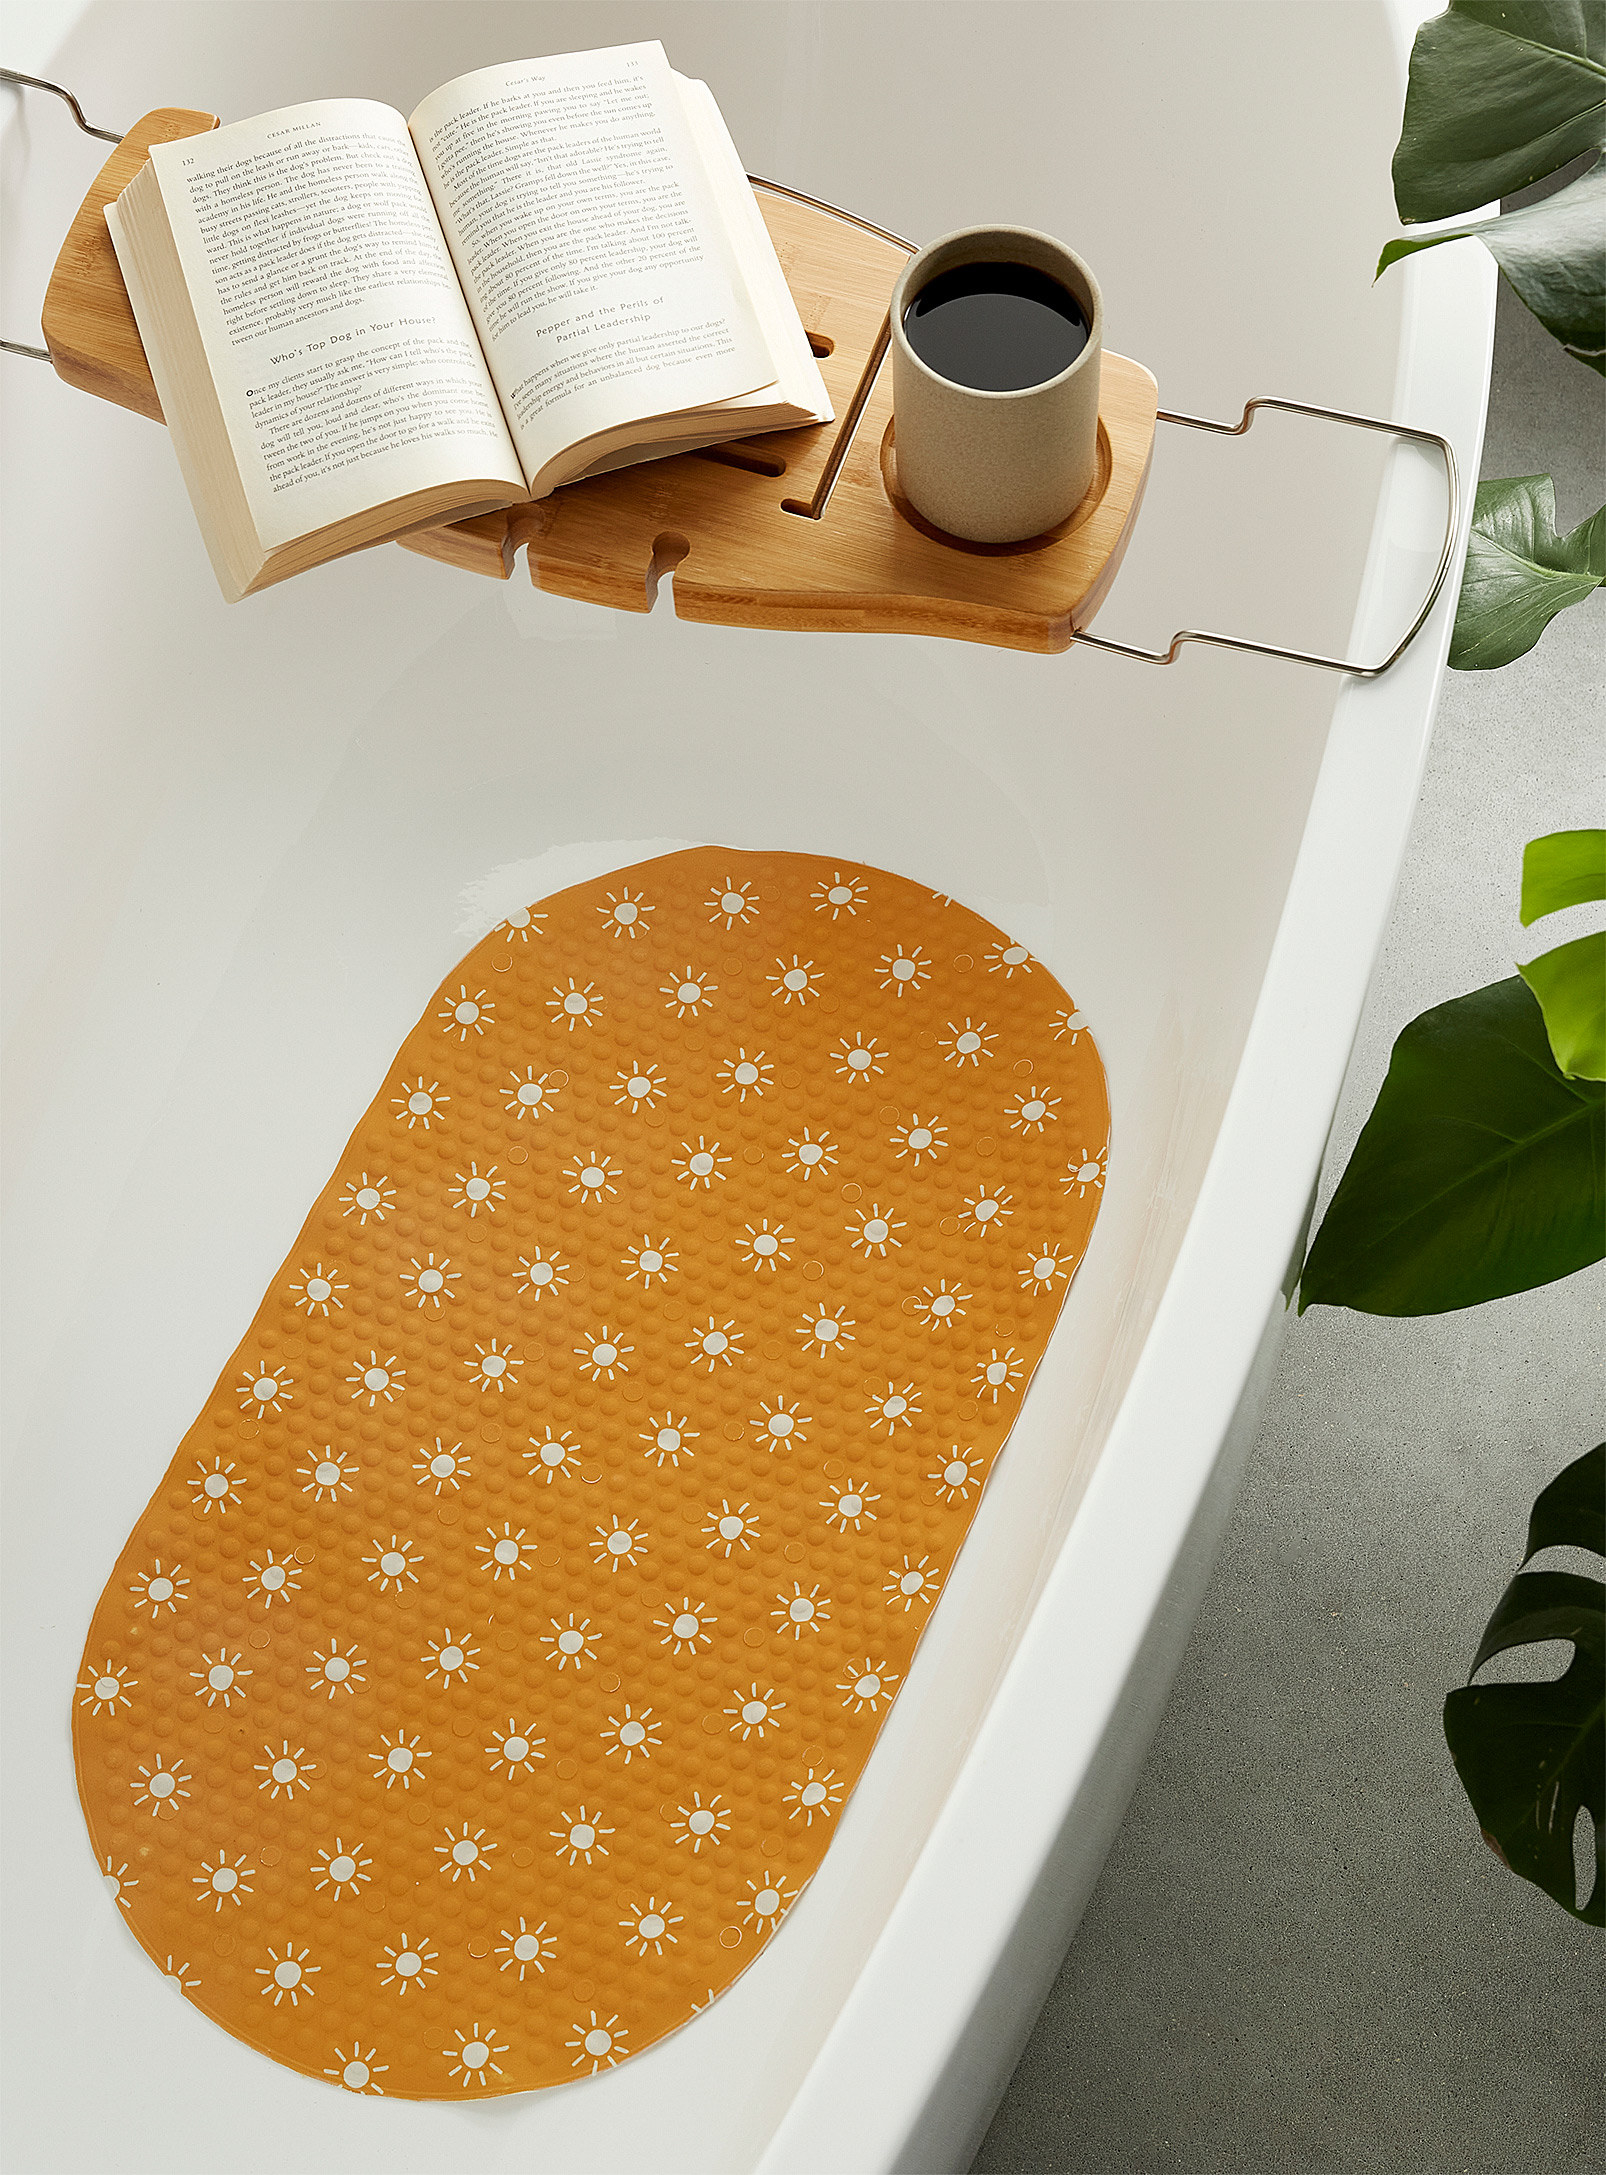 A mat stuck to the bottom of a bathtub